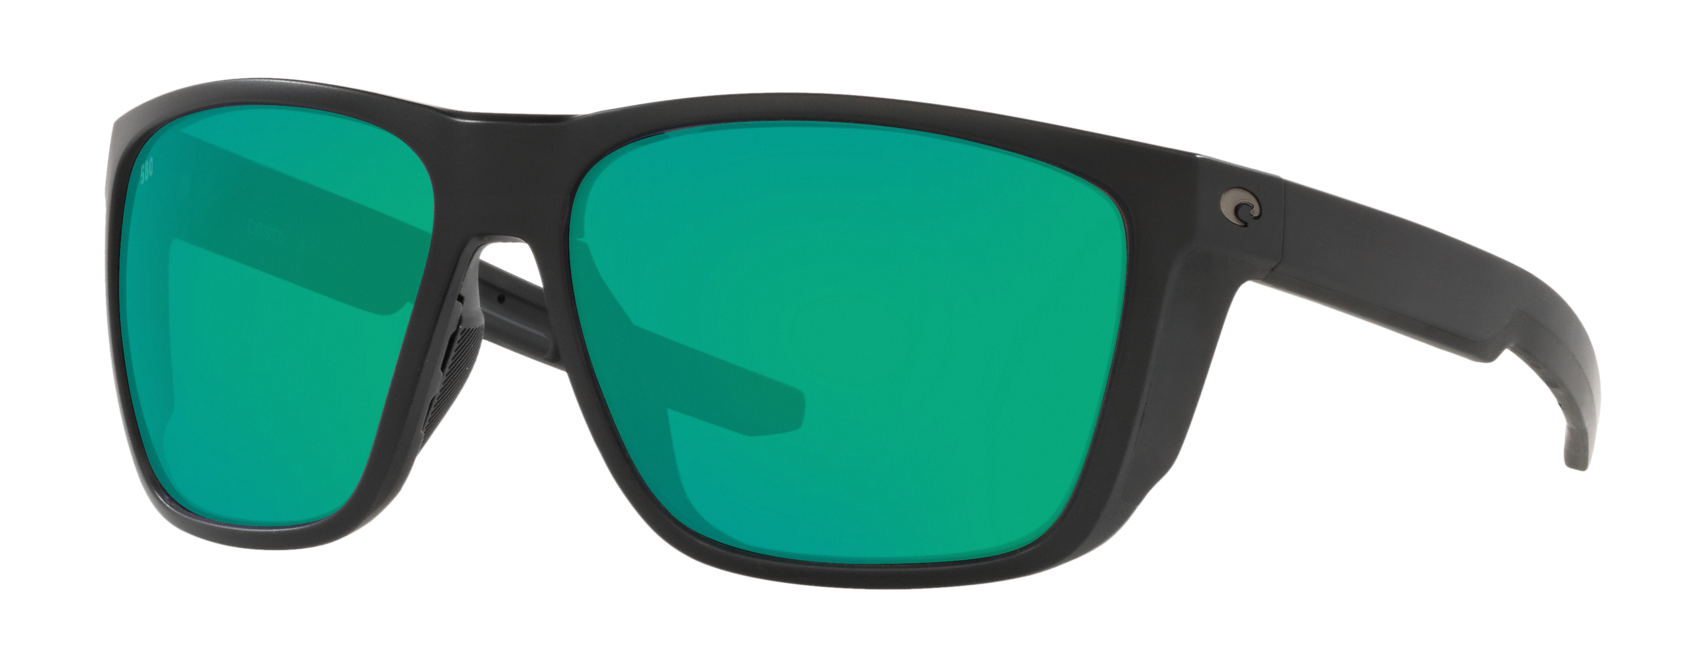 Best Fishing Sunglasses for Big Heads | SportRx